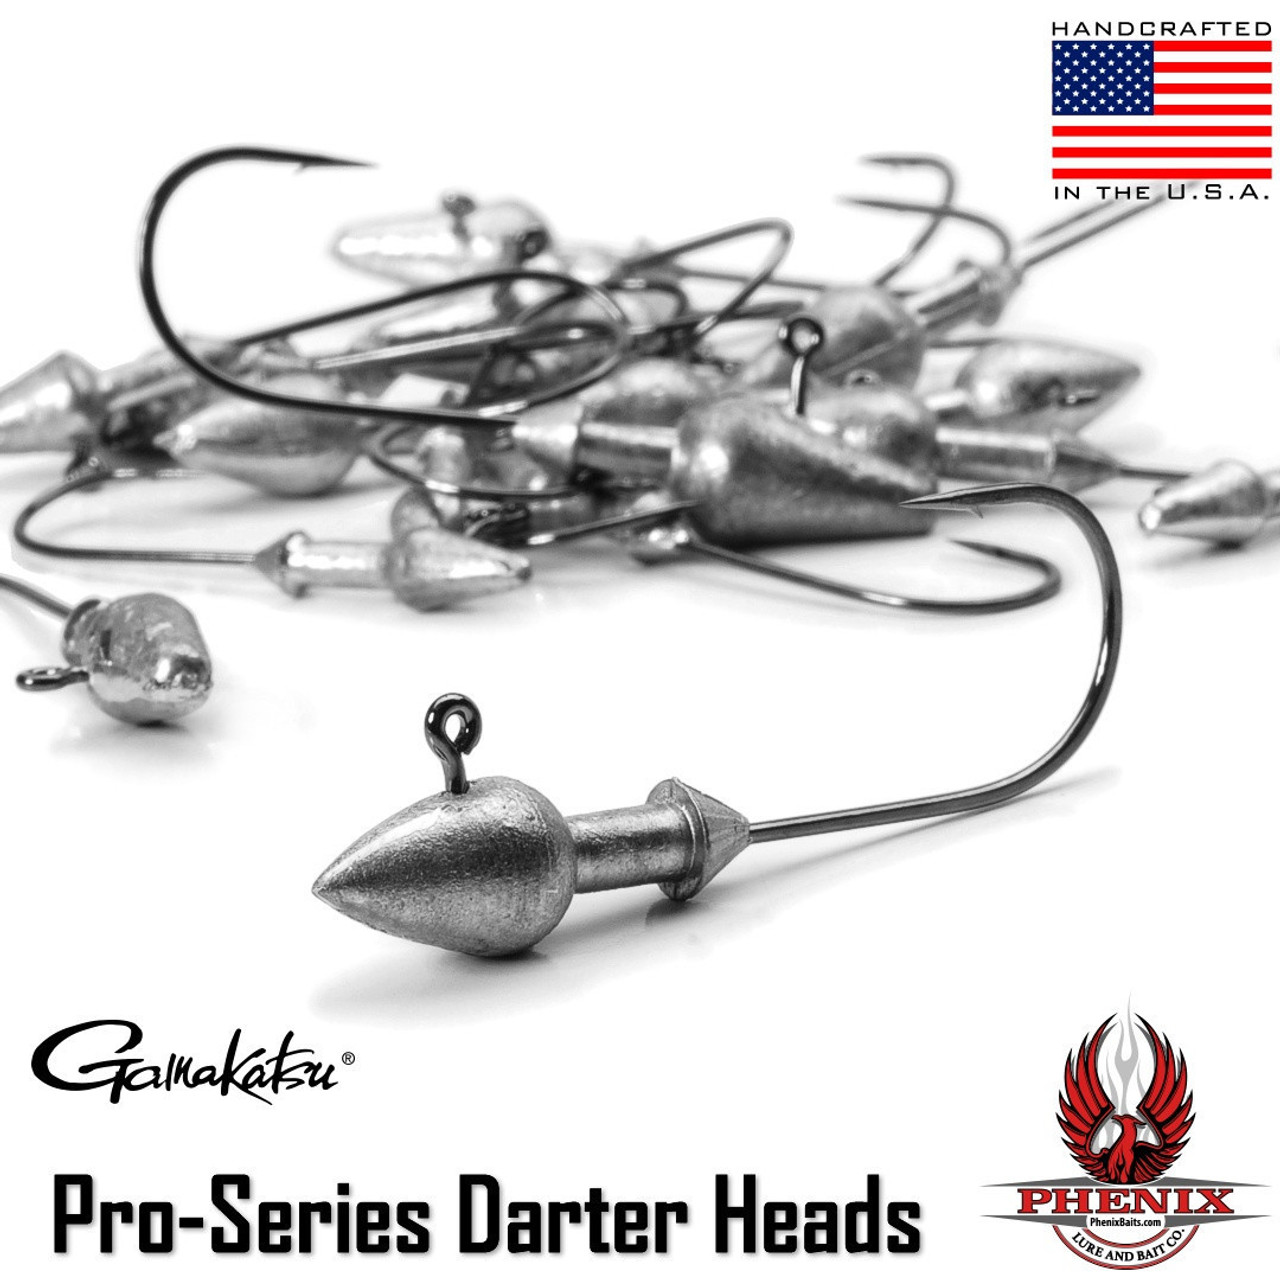 Pro-Series Darter Heads 1/4 oz. 3/0 Gamakatsu Hook (5-pack)